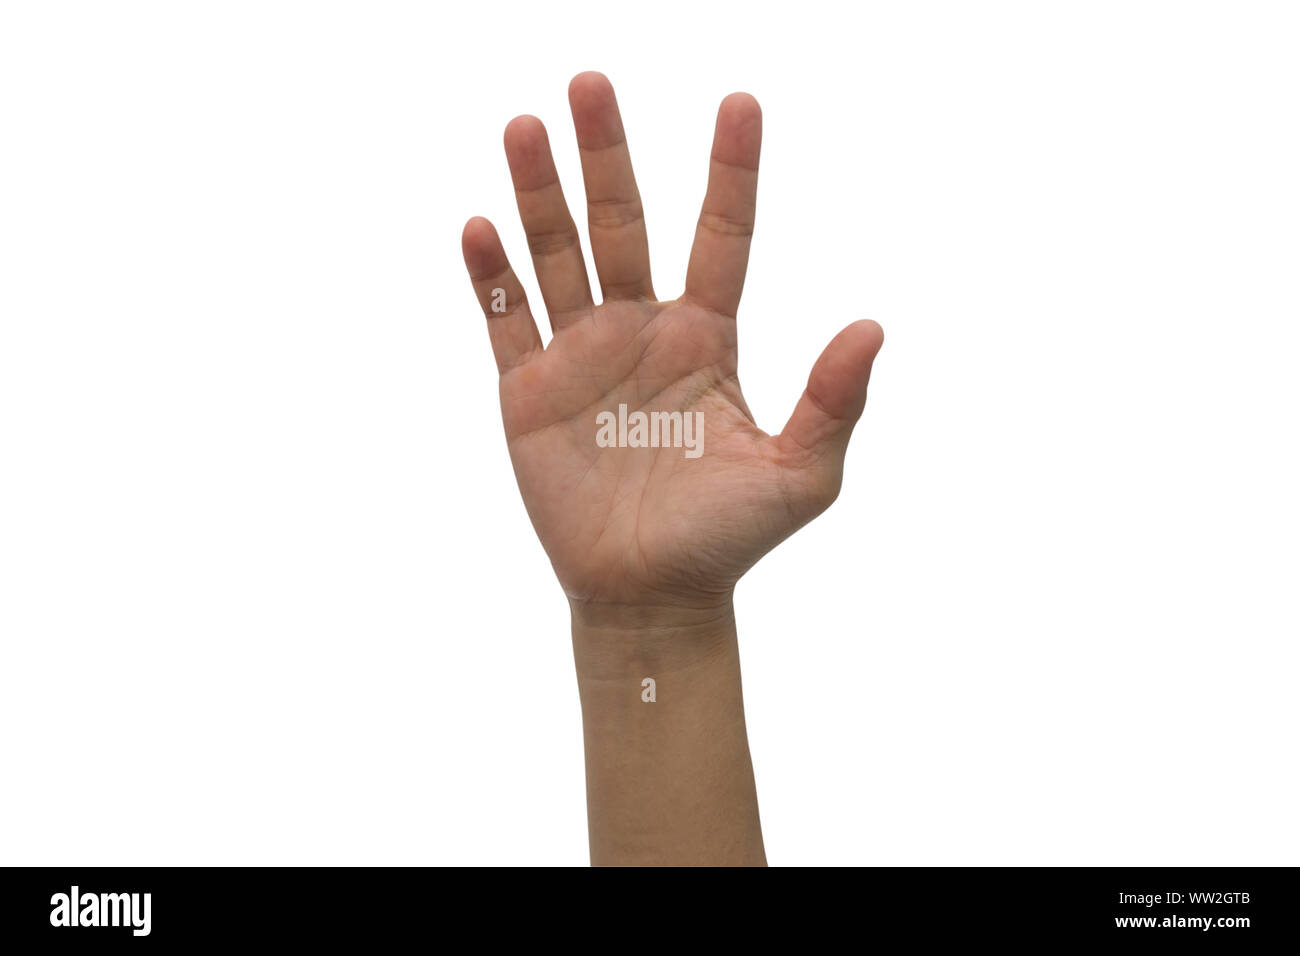 One hand raised high up isolated on white background. Stock Photo